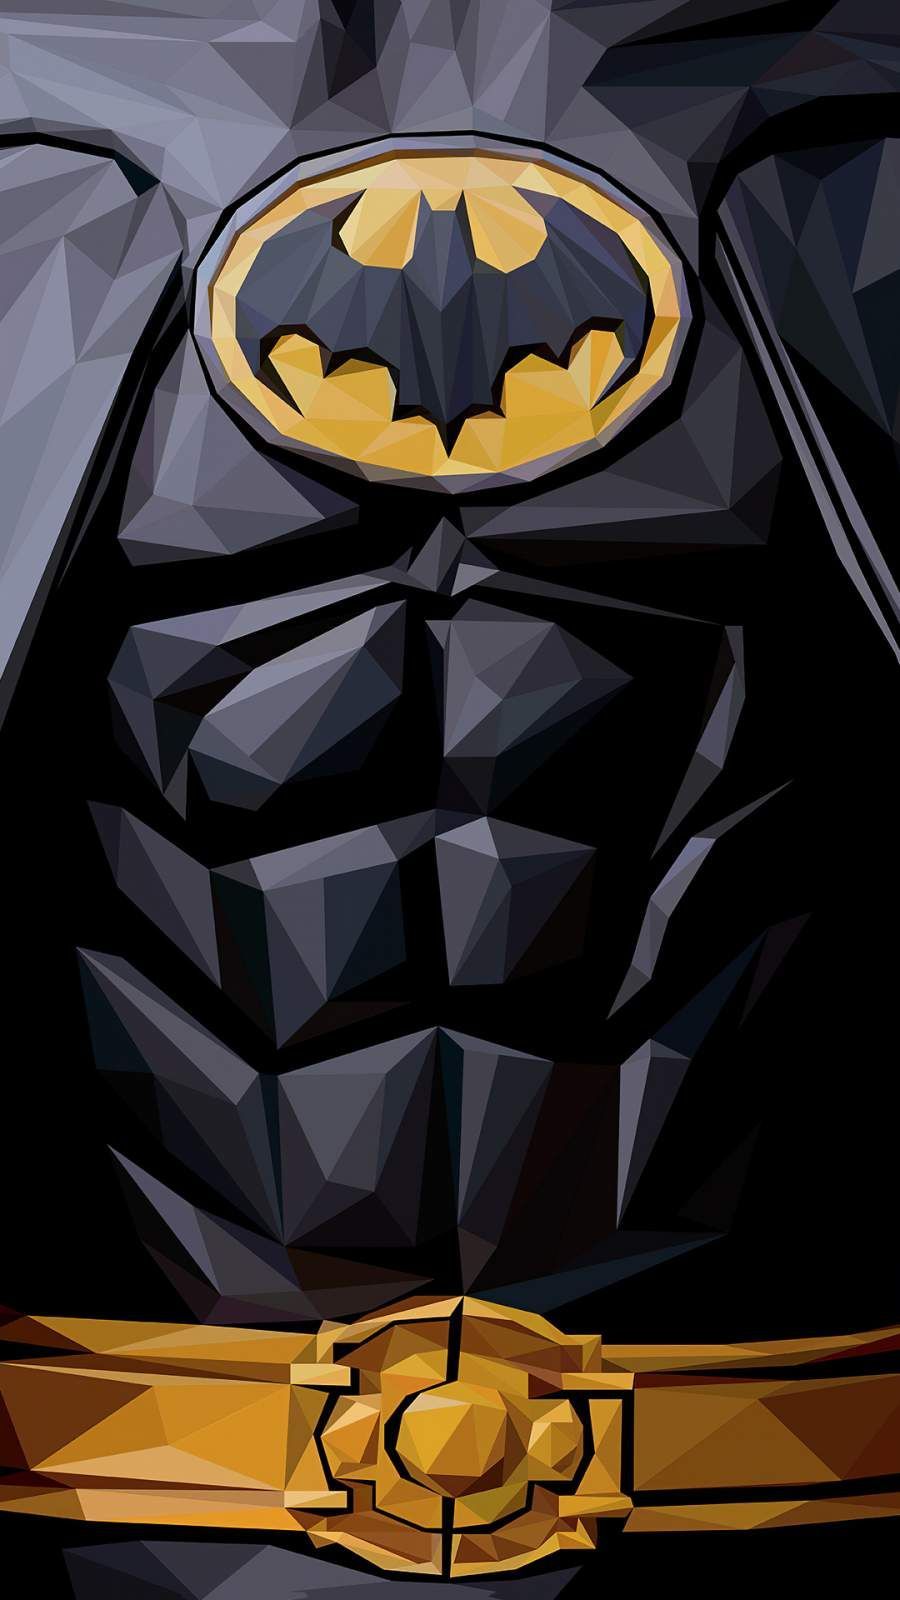 Batman Polygon 4K iPhone Wallpaper. HD batman wallpaper, Batman wallpaper, Batman artwork